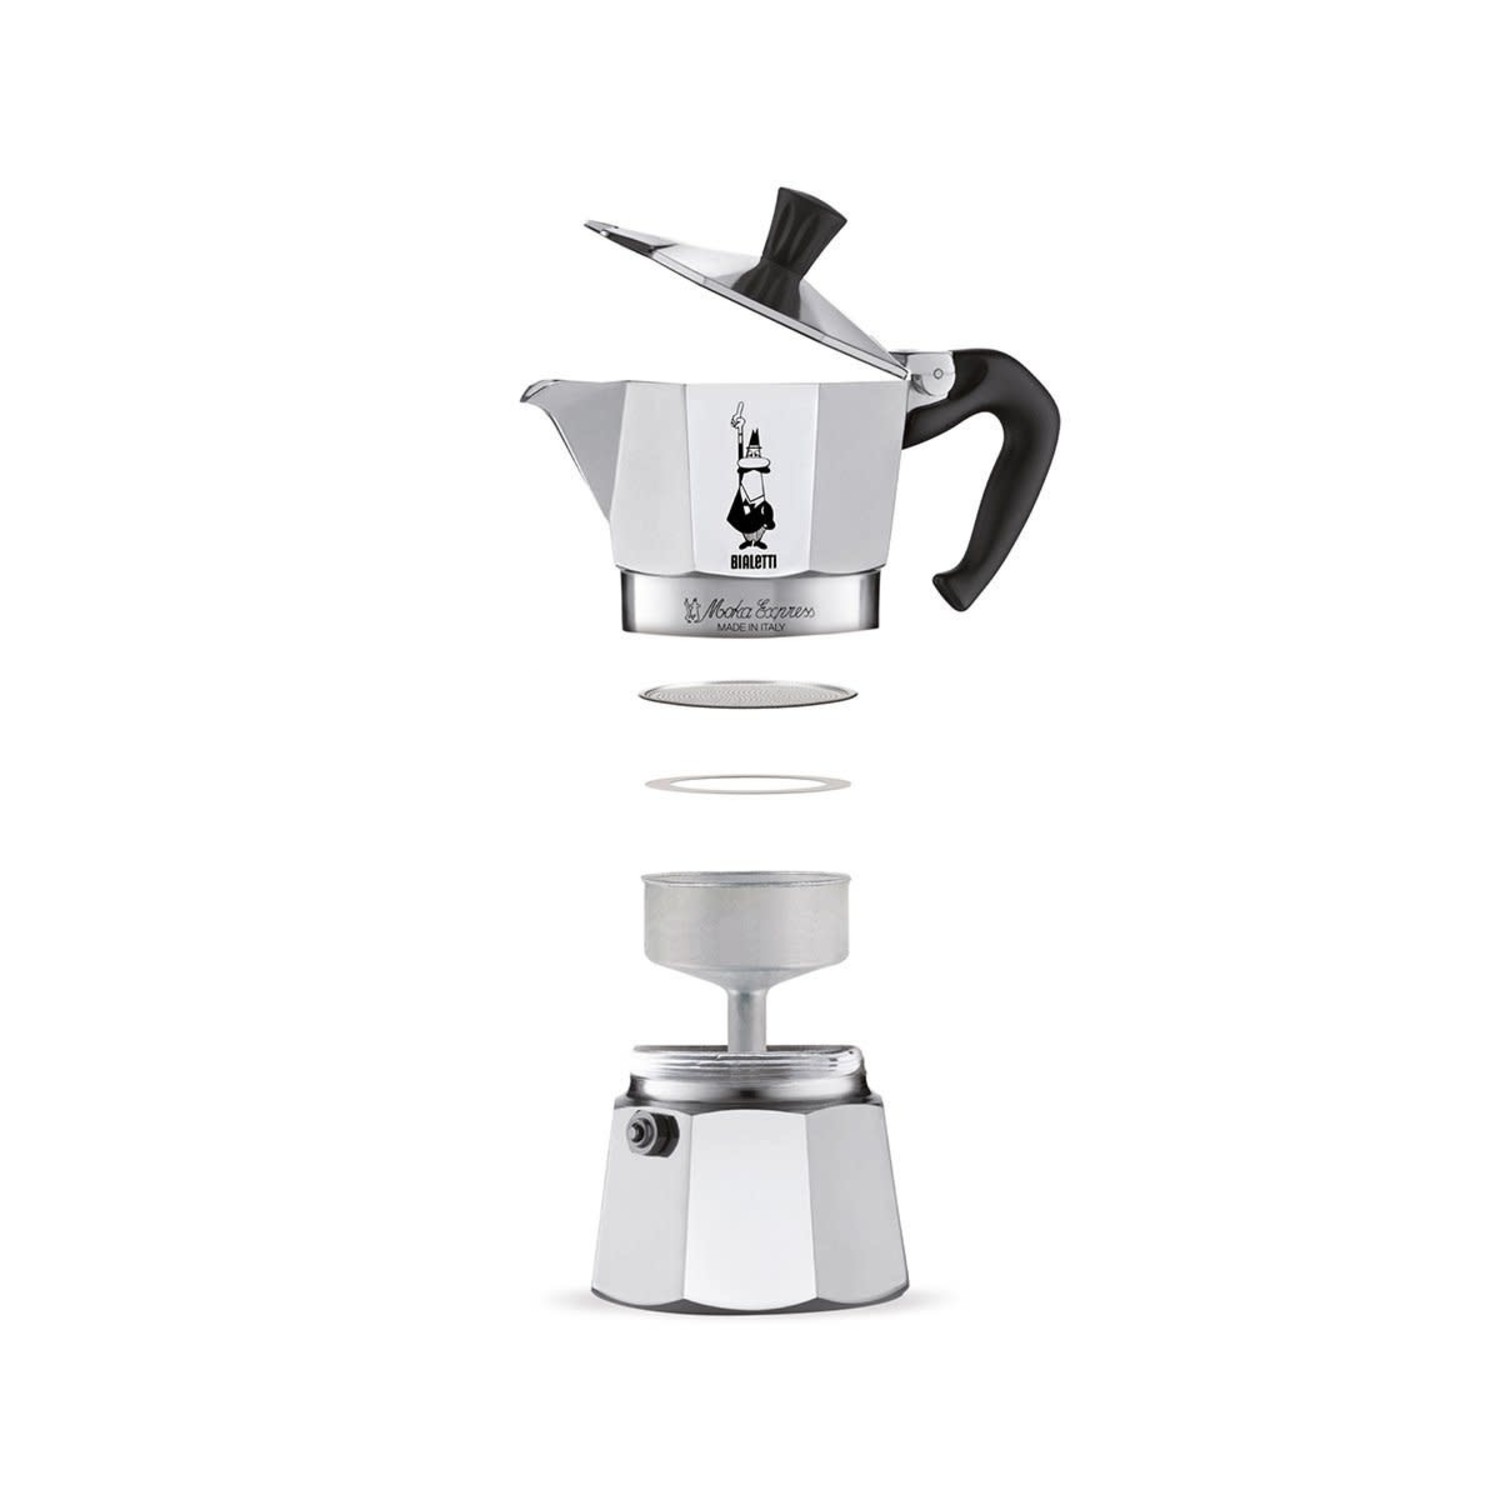 https://cdn.shoplightspeed.com/shops/633447/files/18301533/1500x4000x3/bialetti-moka-express-1-cup-espresso-maker.jpg